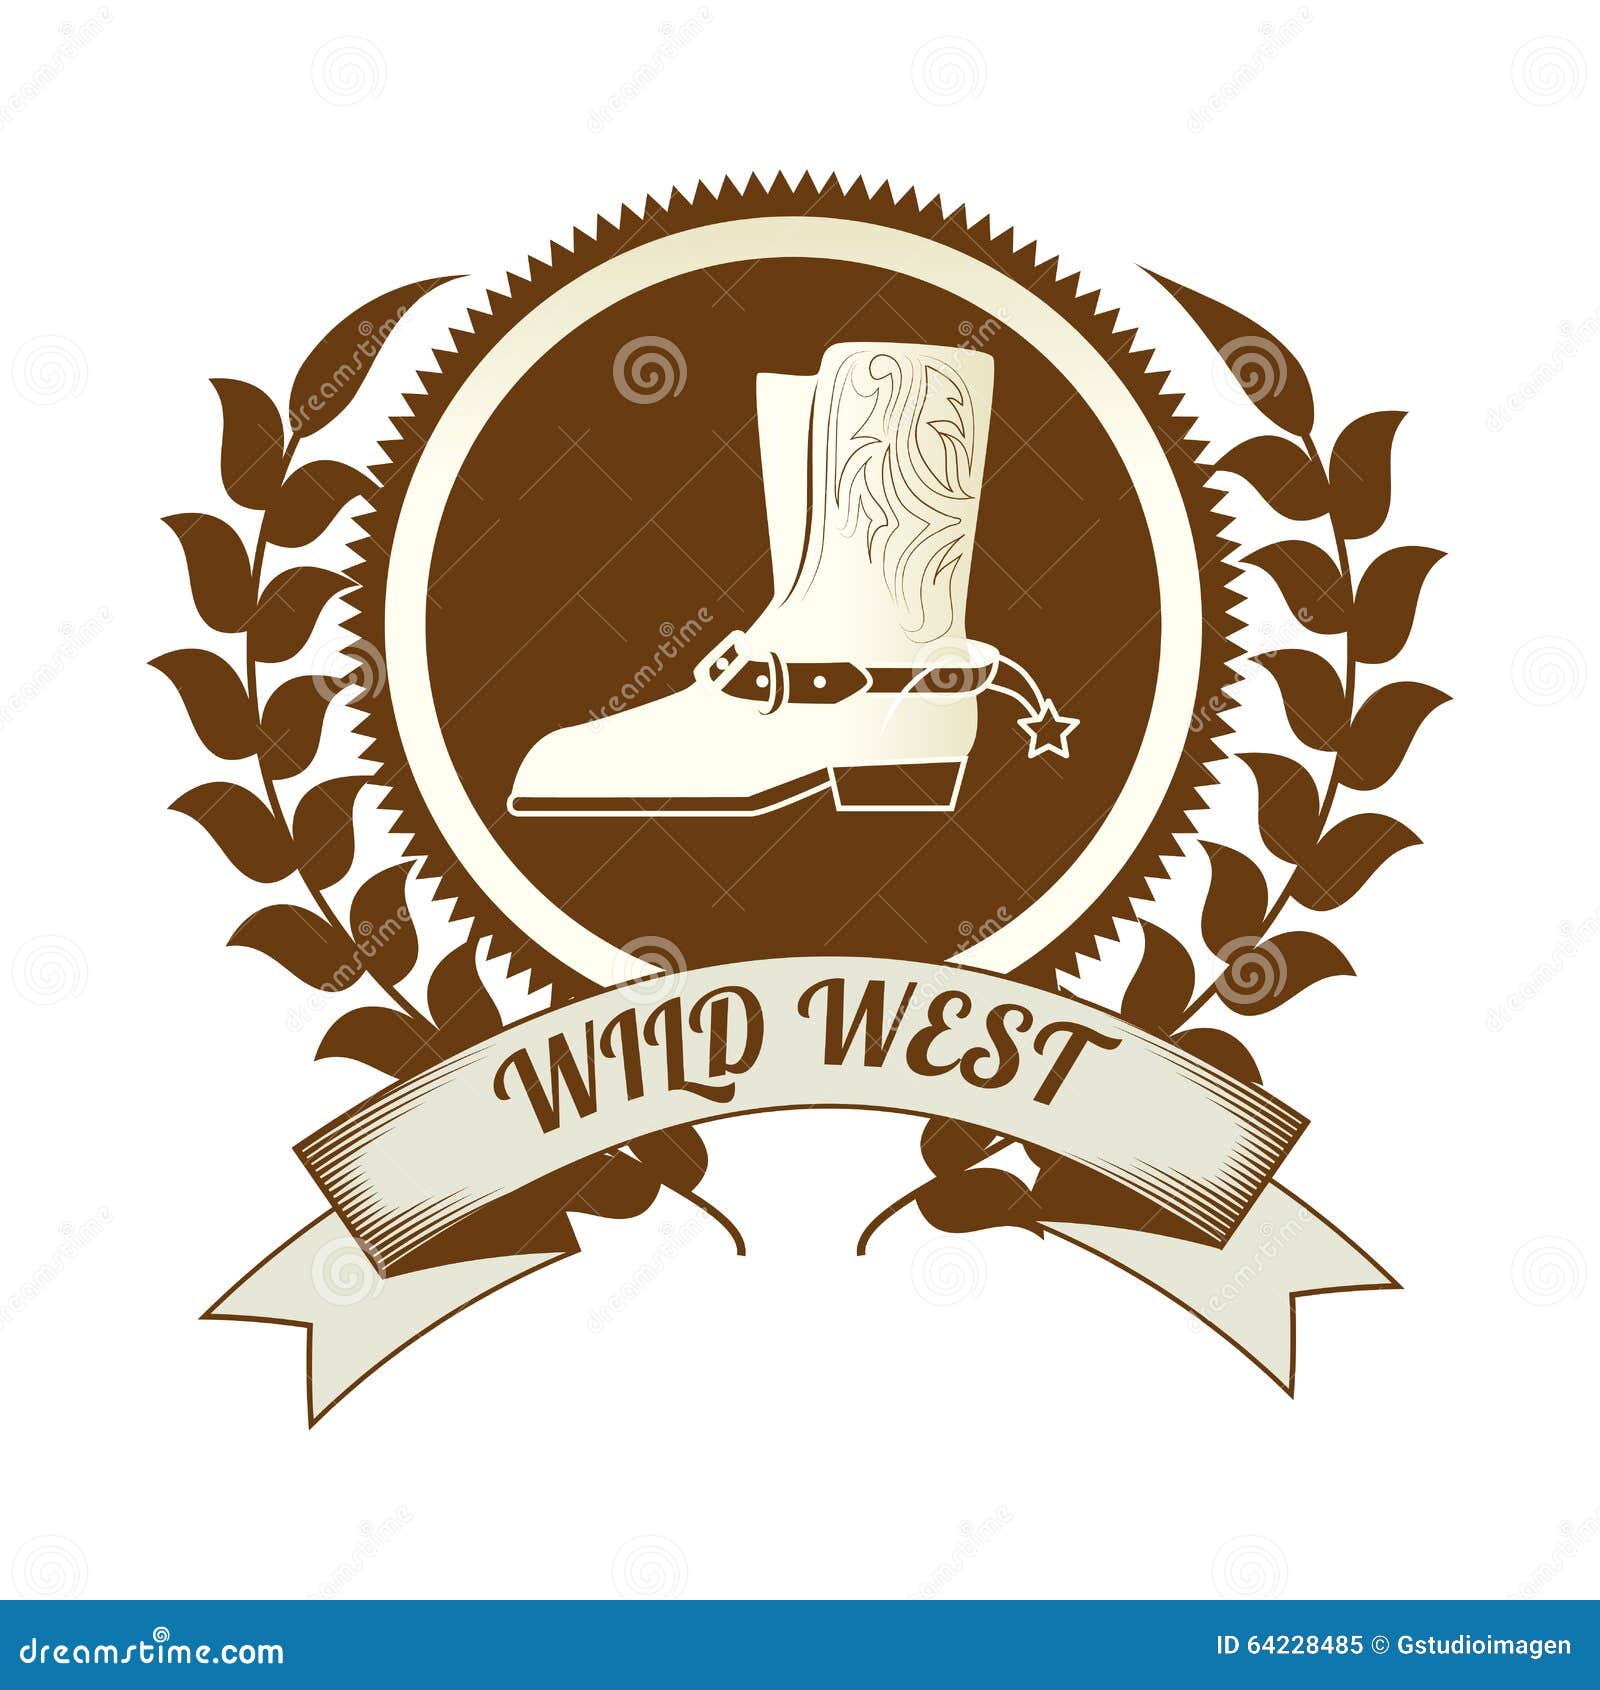 Wild west culture stock illustration. Illustration of symbol - 64228485